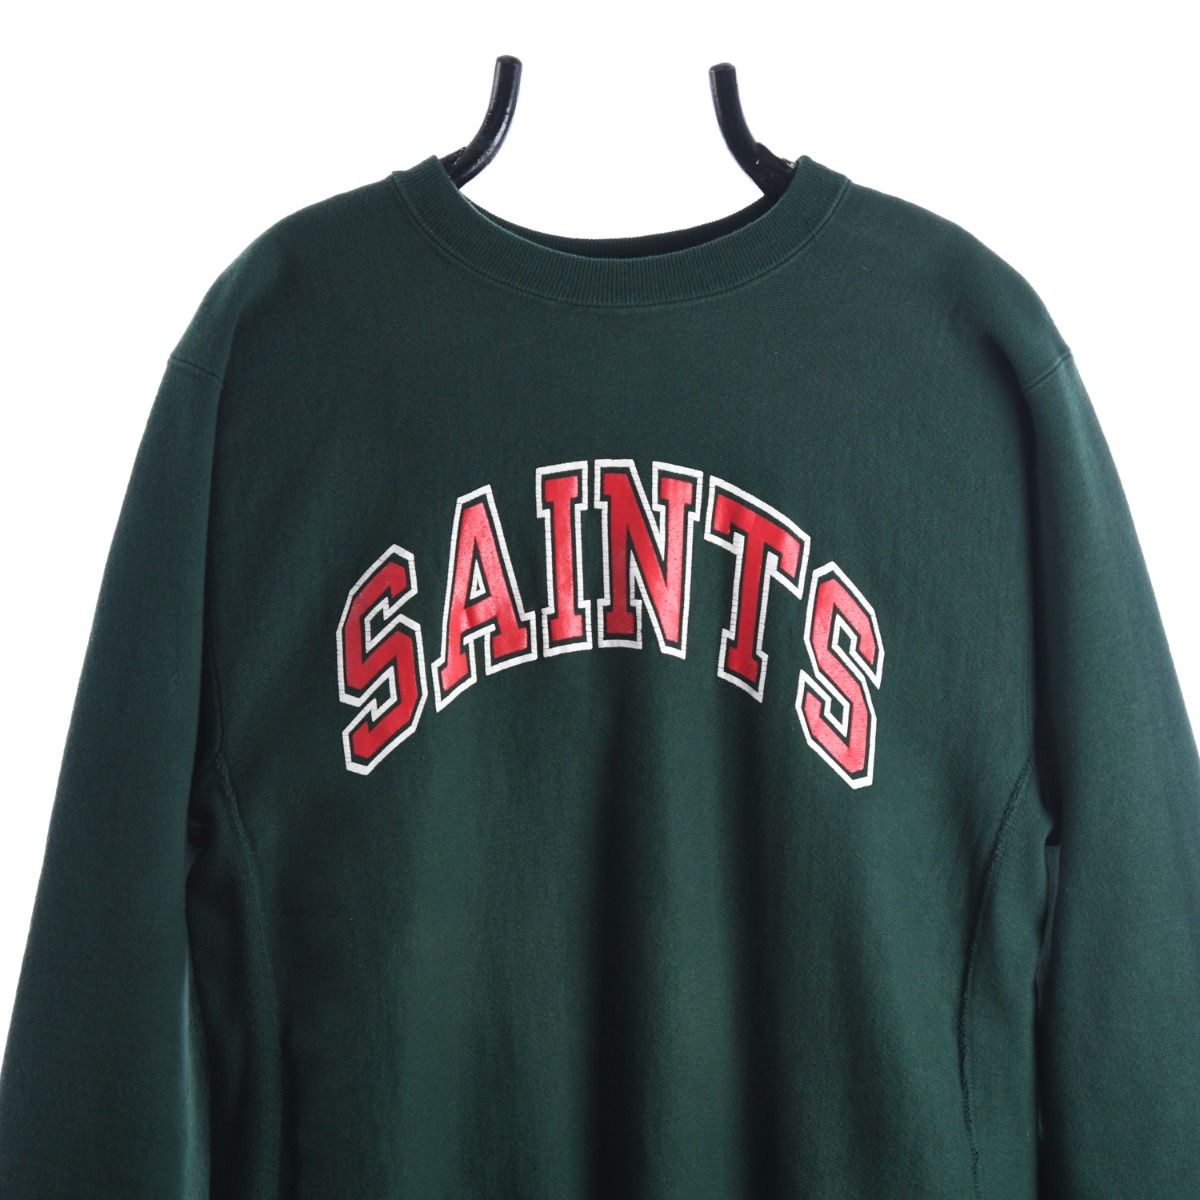 Champion 'Saints' Early 1990s Reverse Weave Sweatshirt